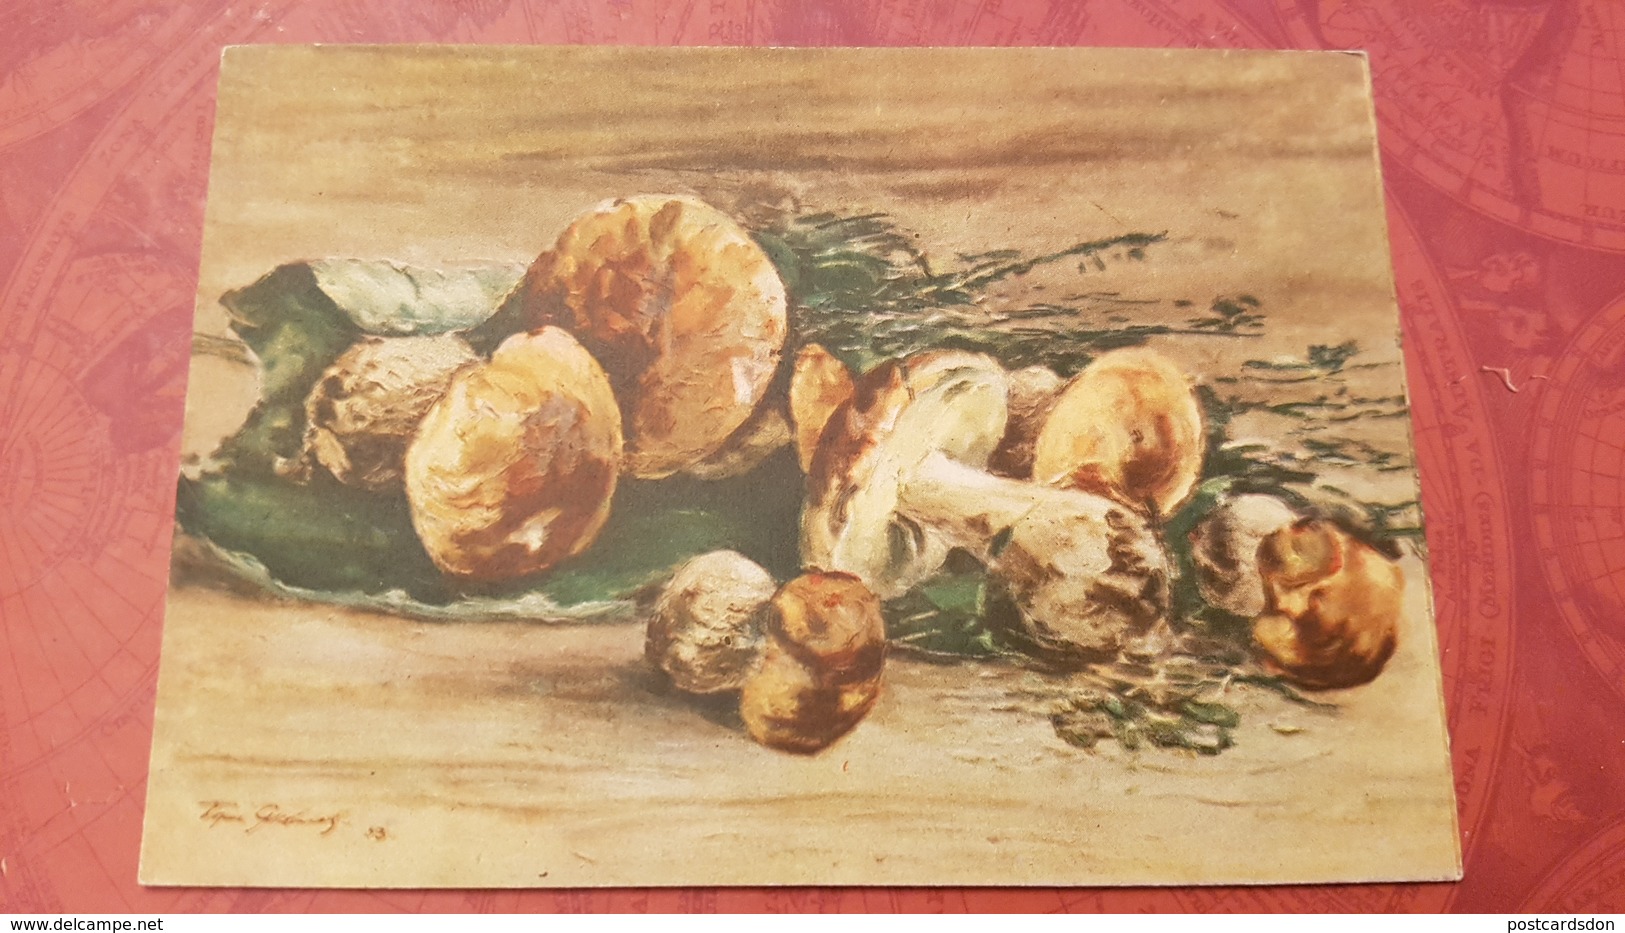 Yakovlev "Mushrooms" - OLD PC 1956  - Mushroom - Champignon - Pilze